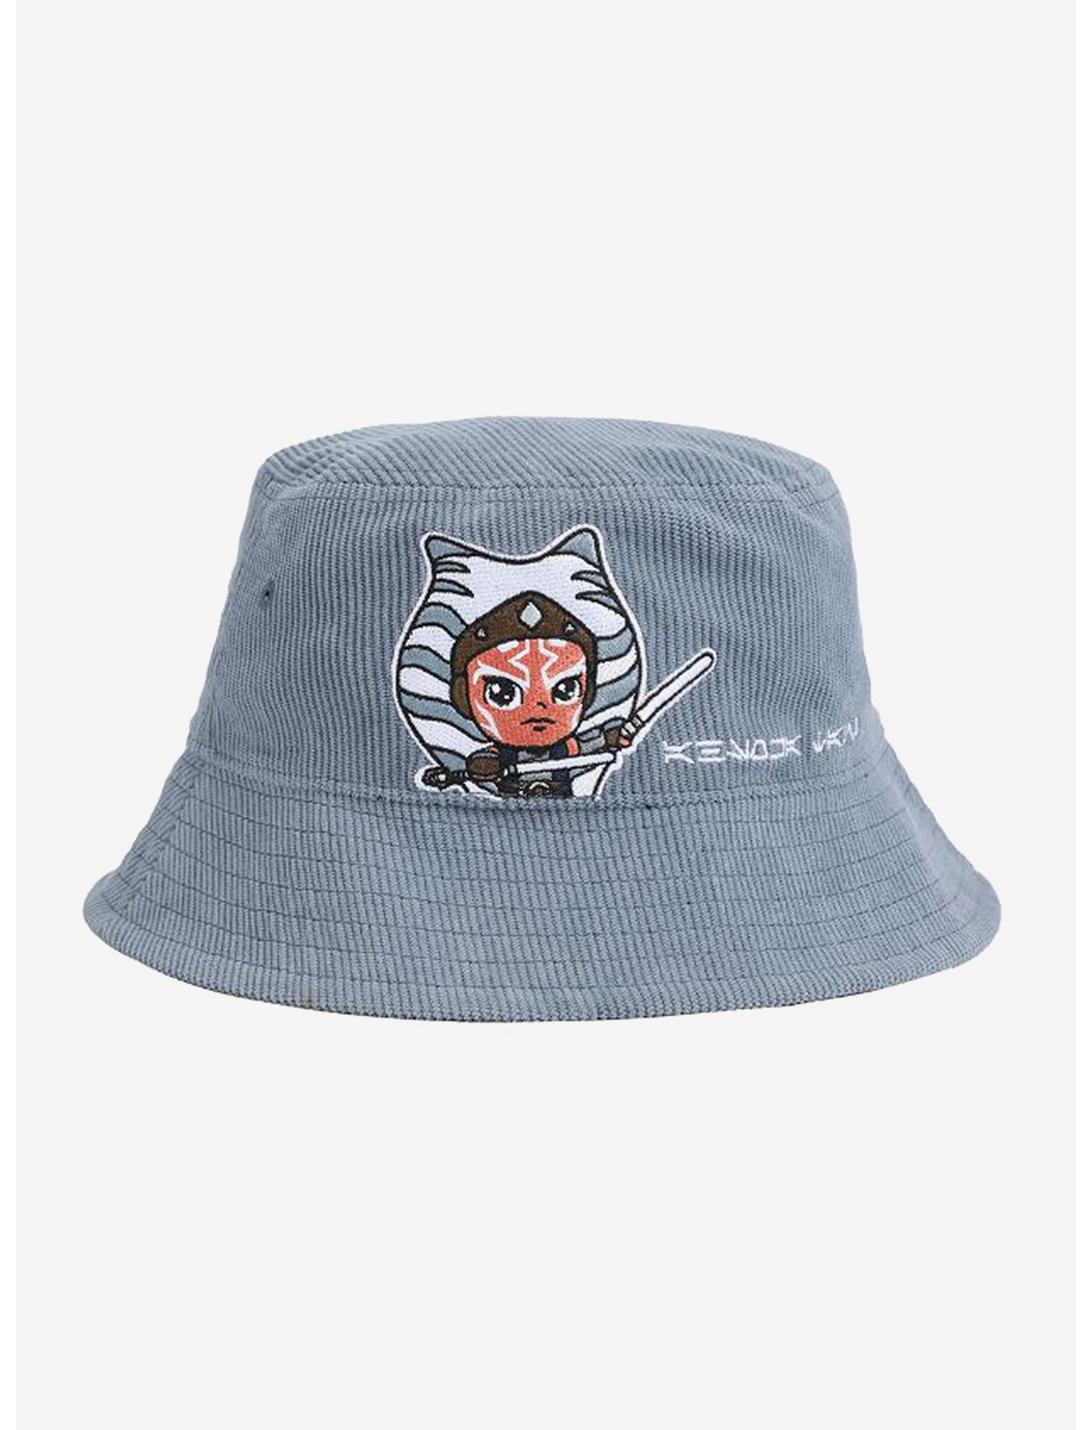 Star Wars Ahsoka Tano Chibi Bucket Hat, , hi-res